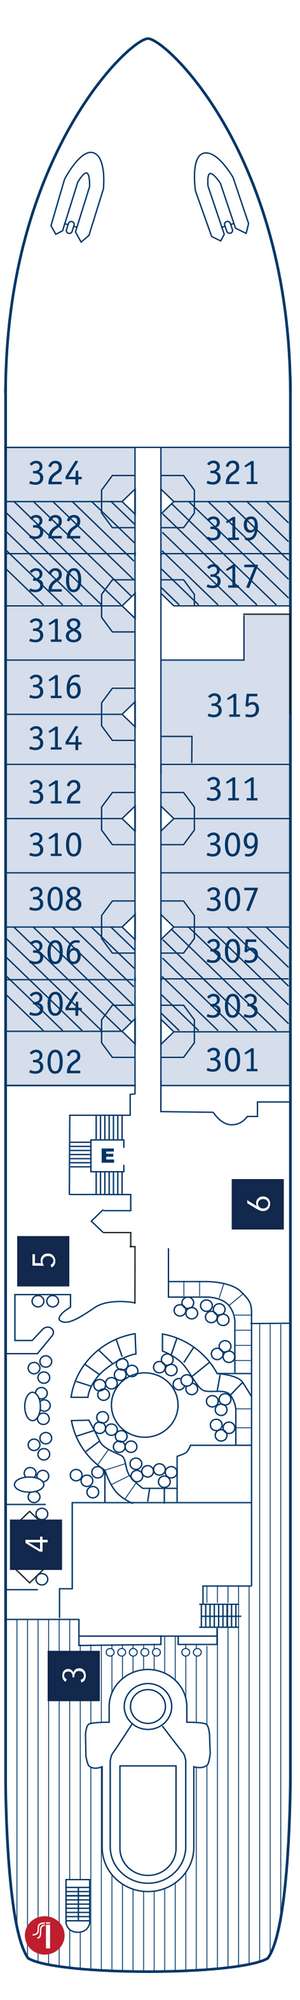 Deck plan for SeaDream II